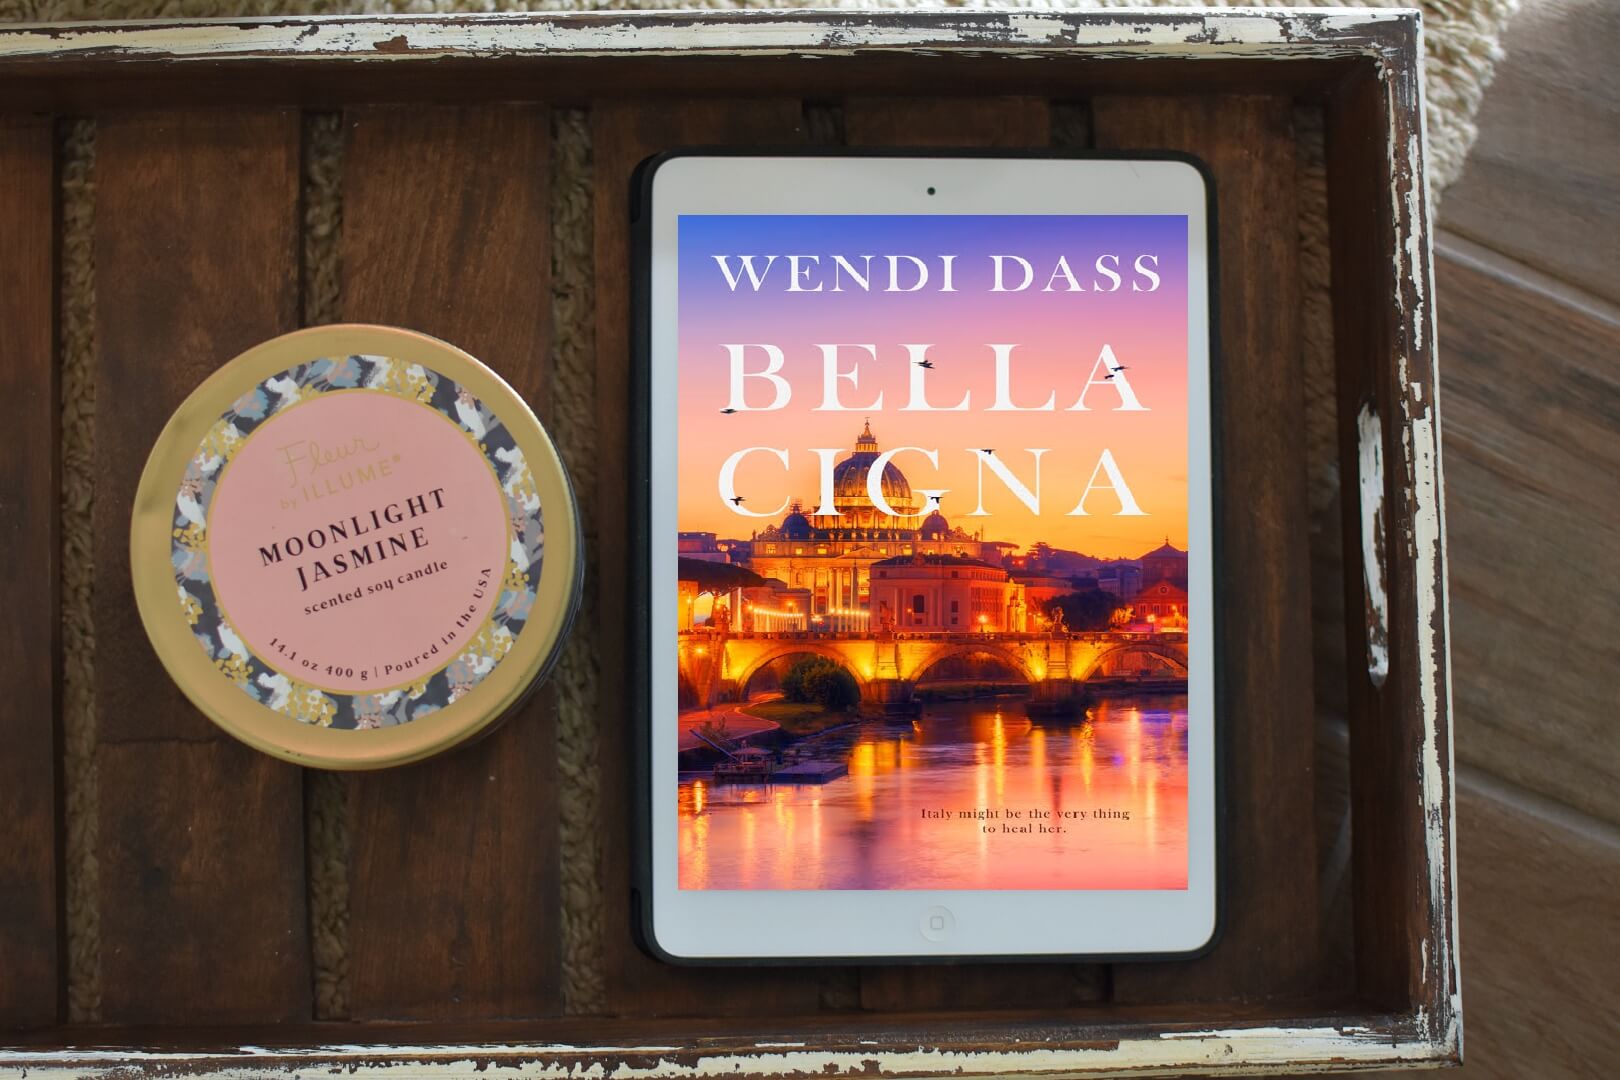 Book Club Questions for Bella Cigna by Wendi Dass